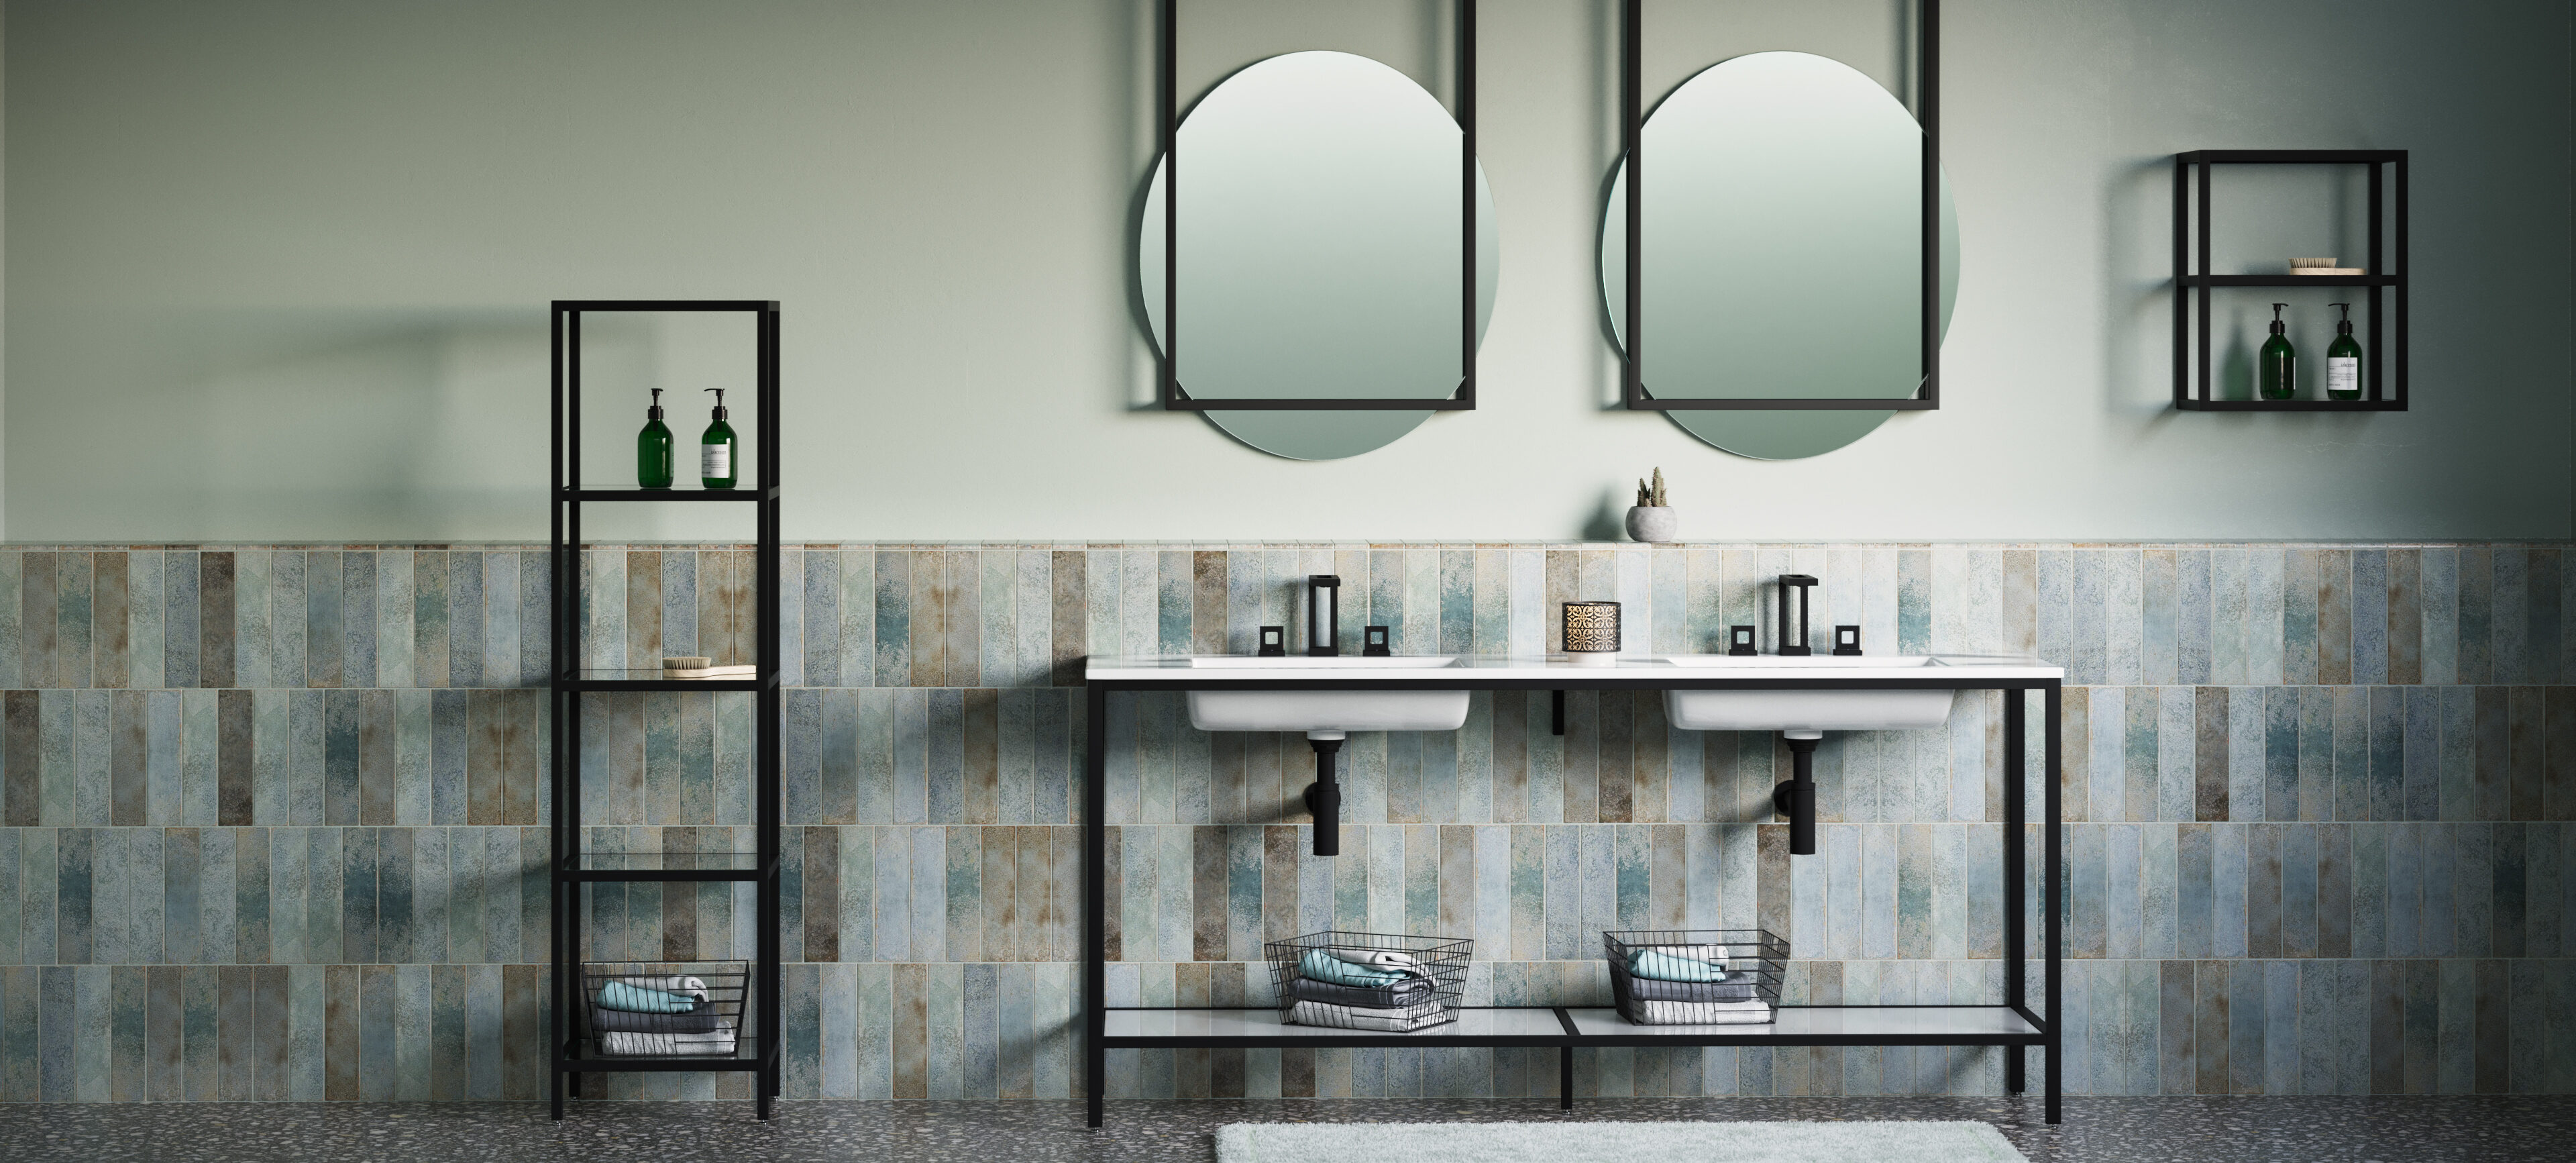 rendering 3d visualization interior product realistic 3d corner rack bathroom fixtures